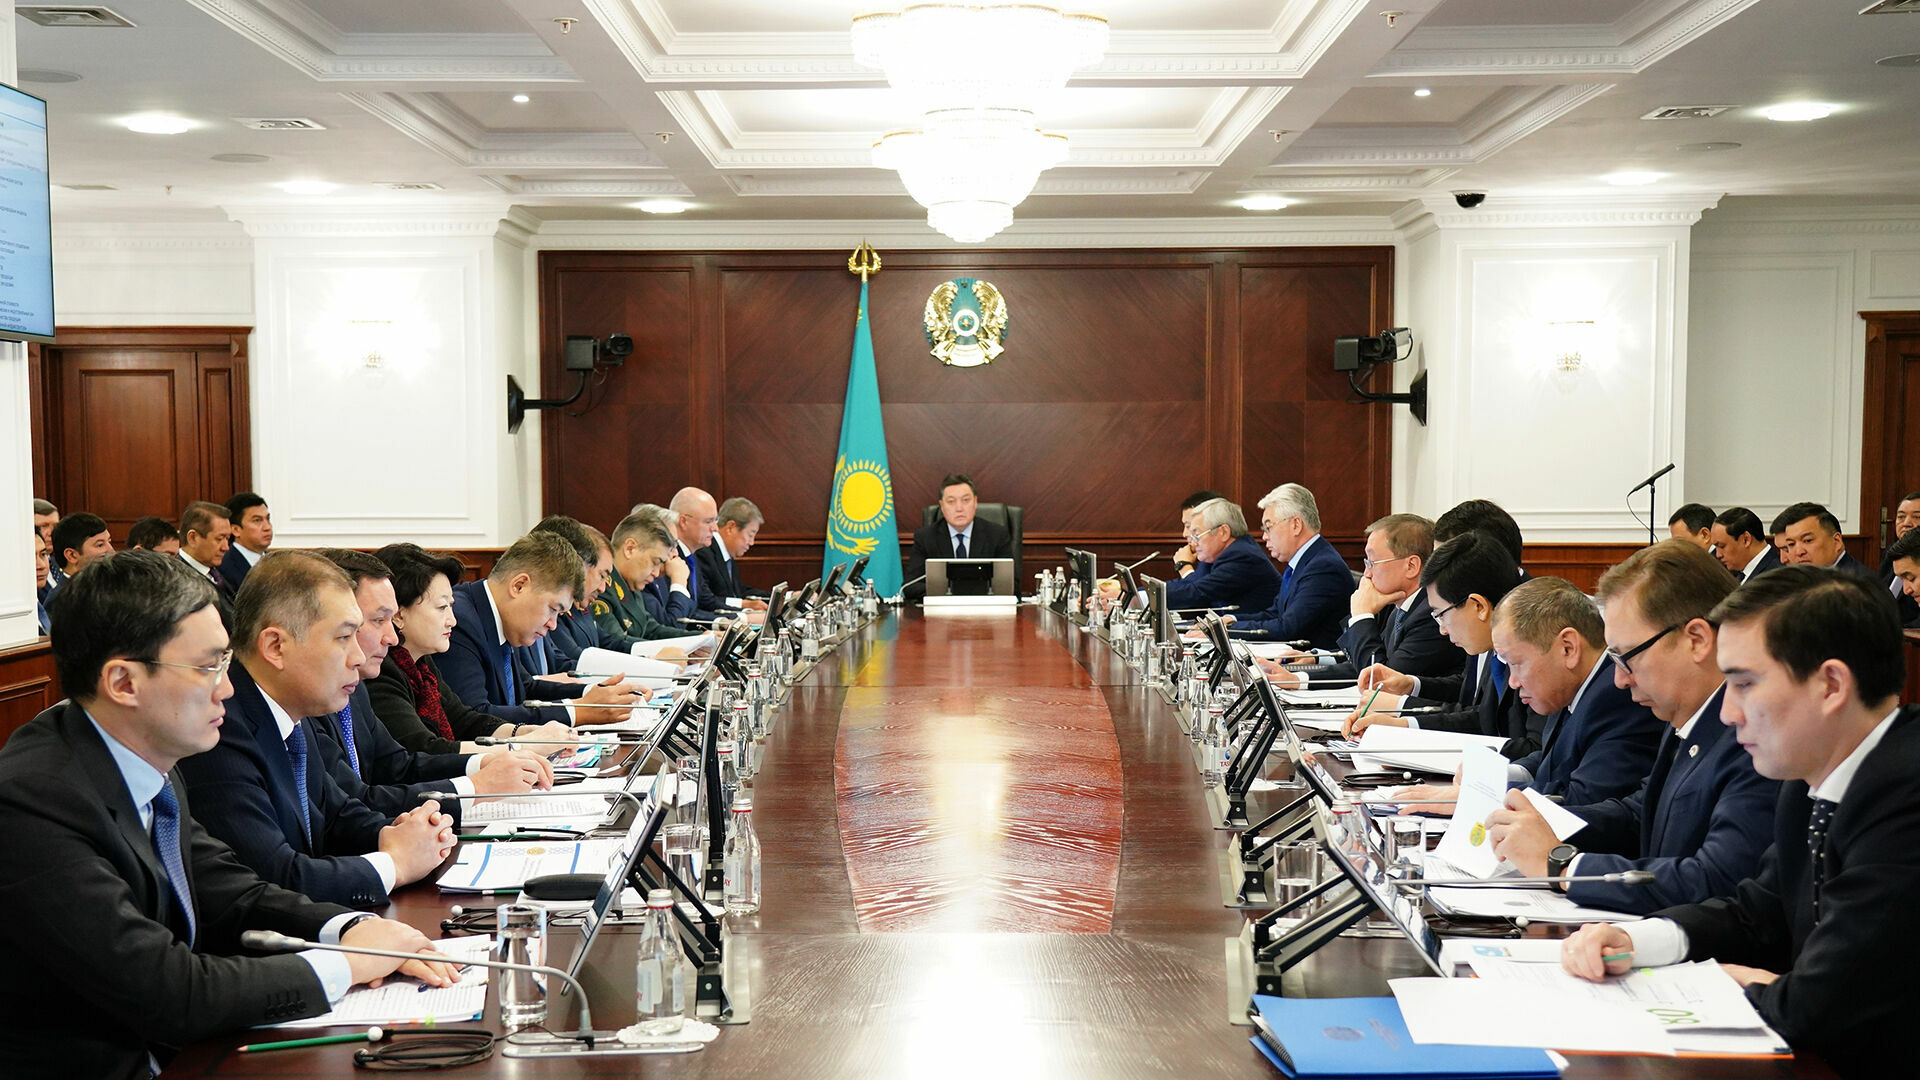 Government of Kazakhstan dismissed, is Nazarbayev next in line?